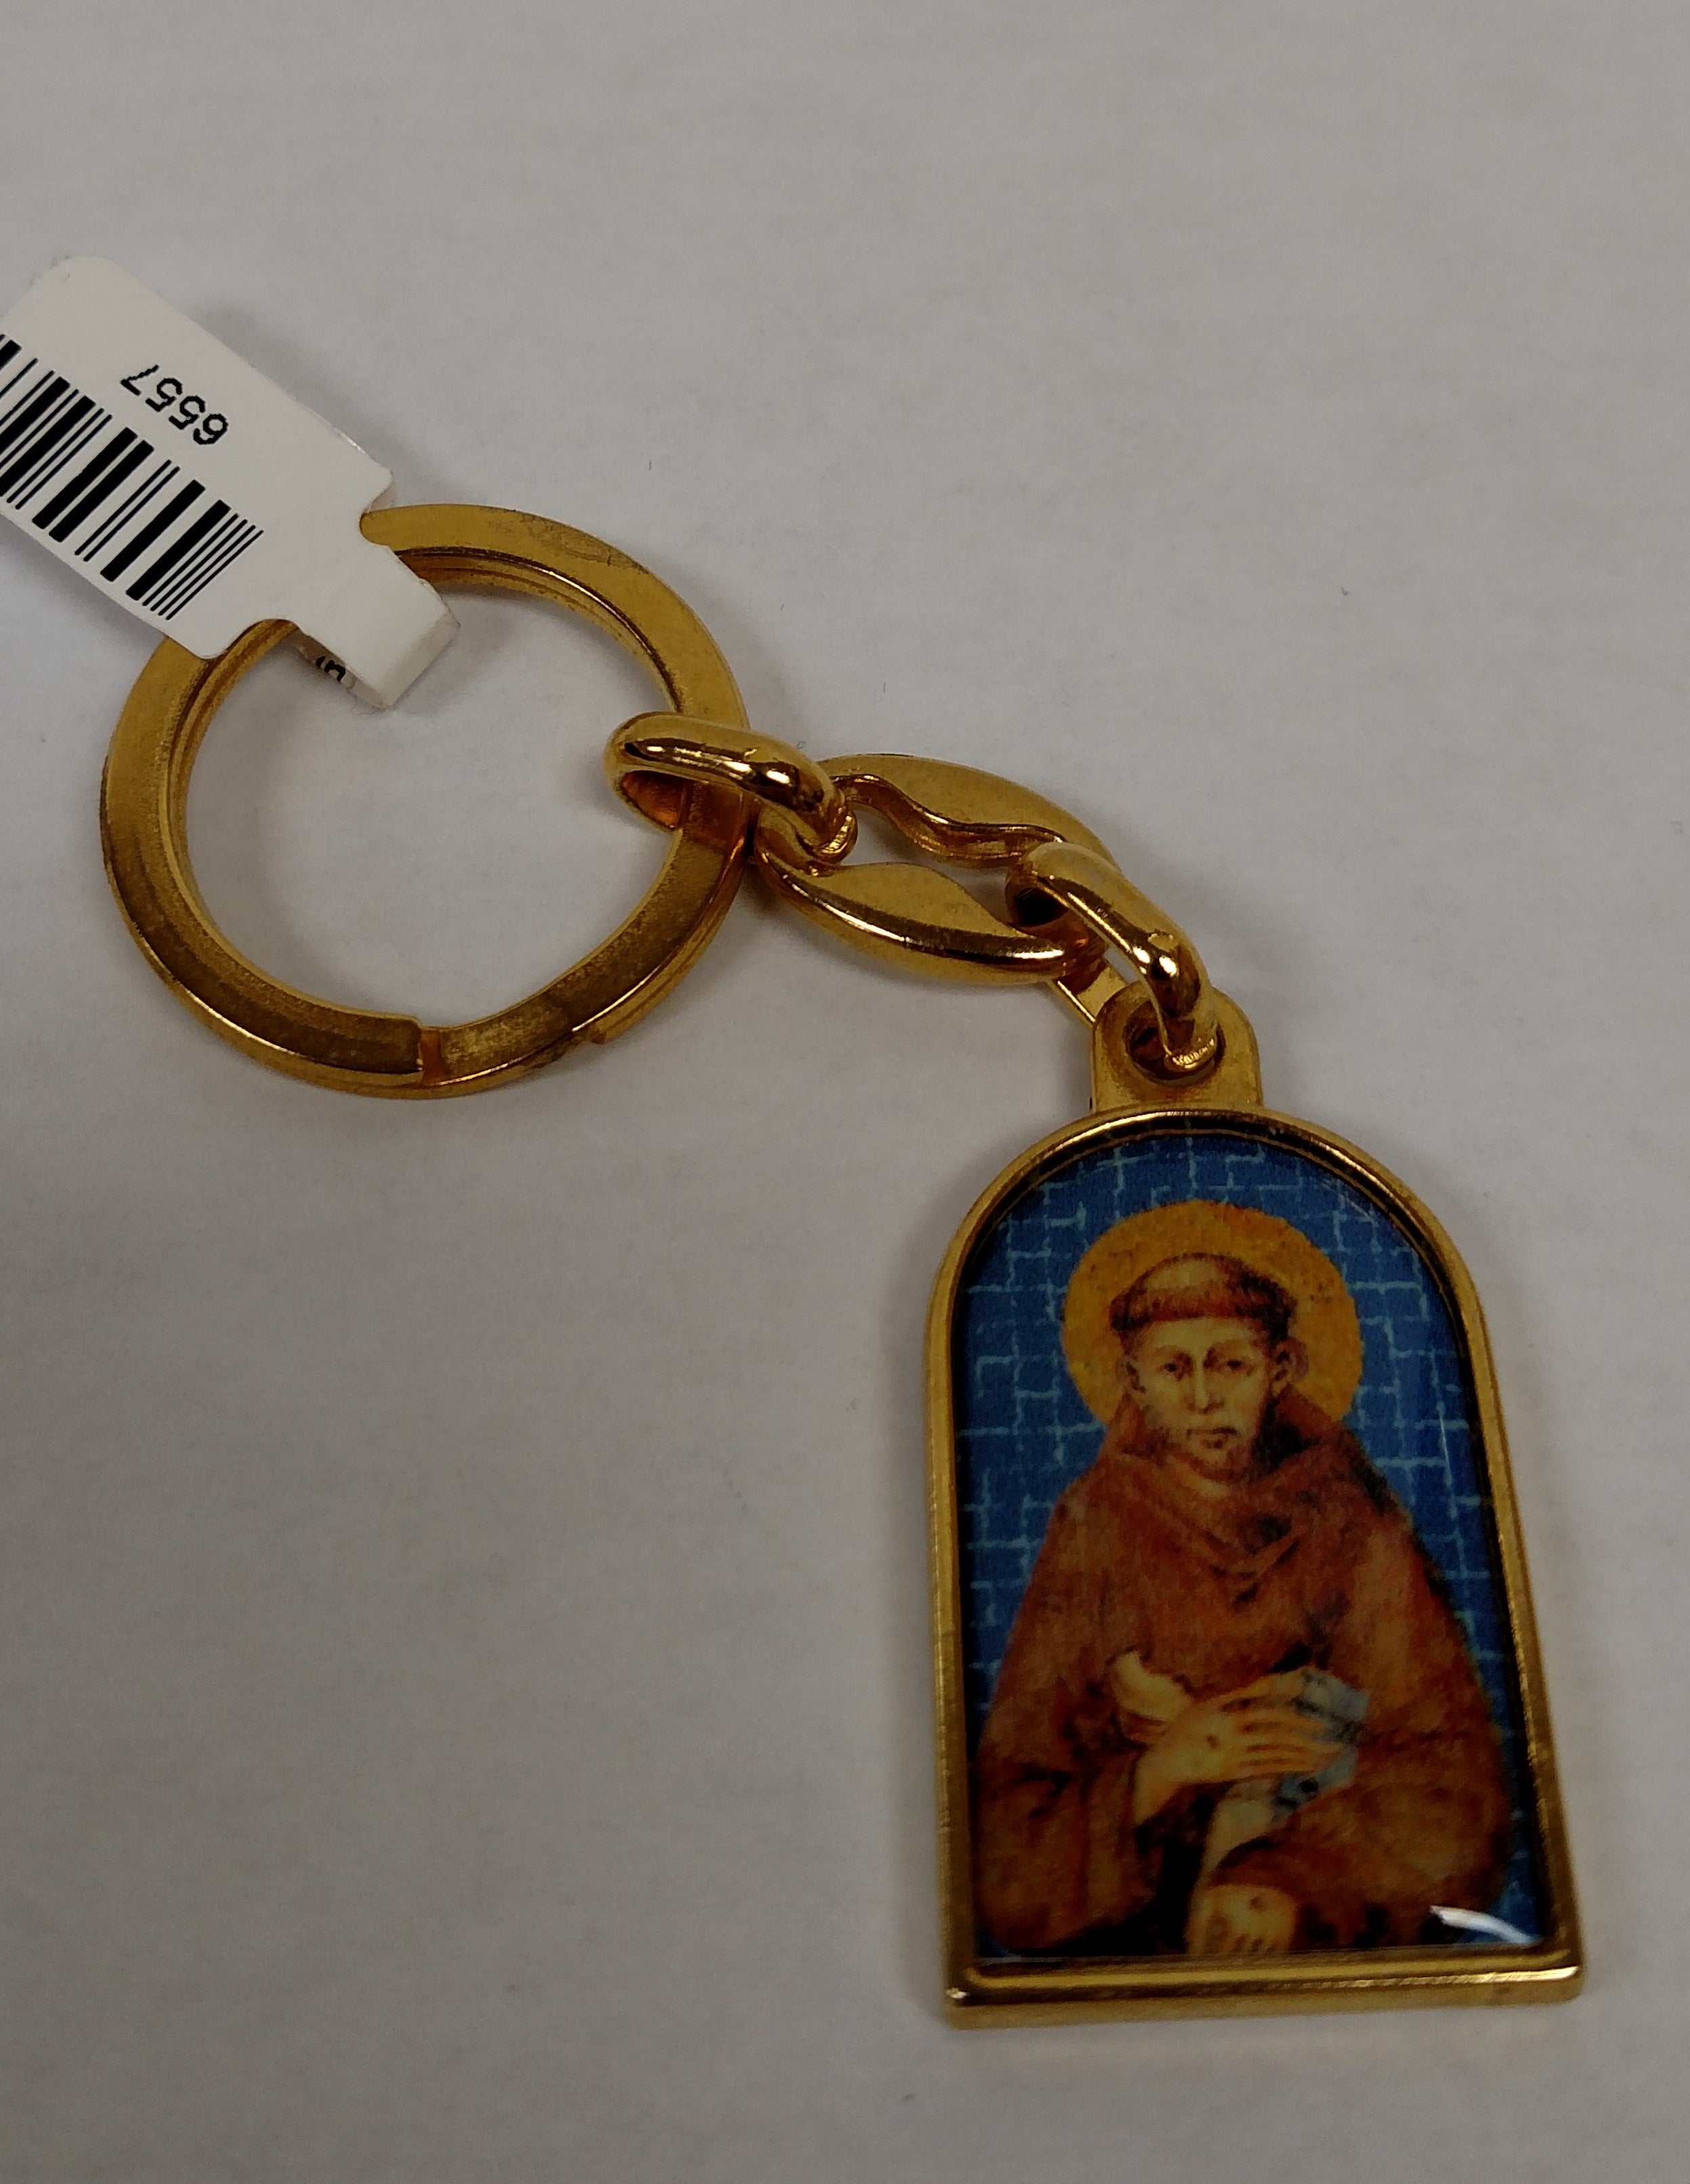 St. Francis keychain